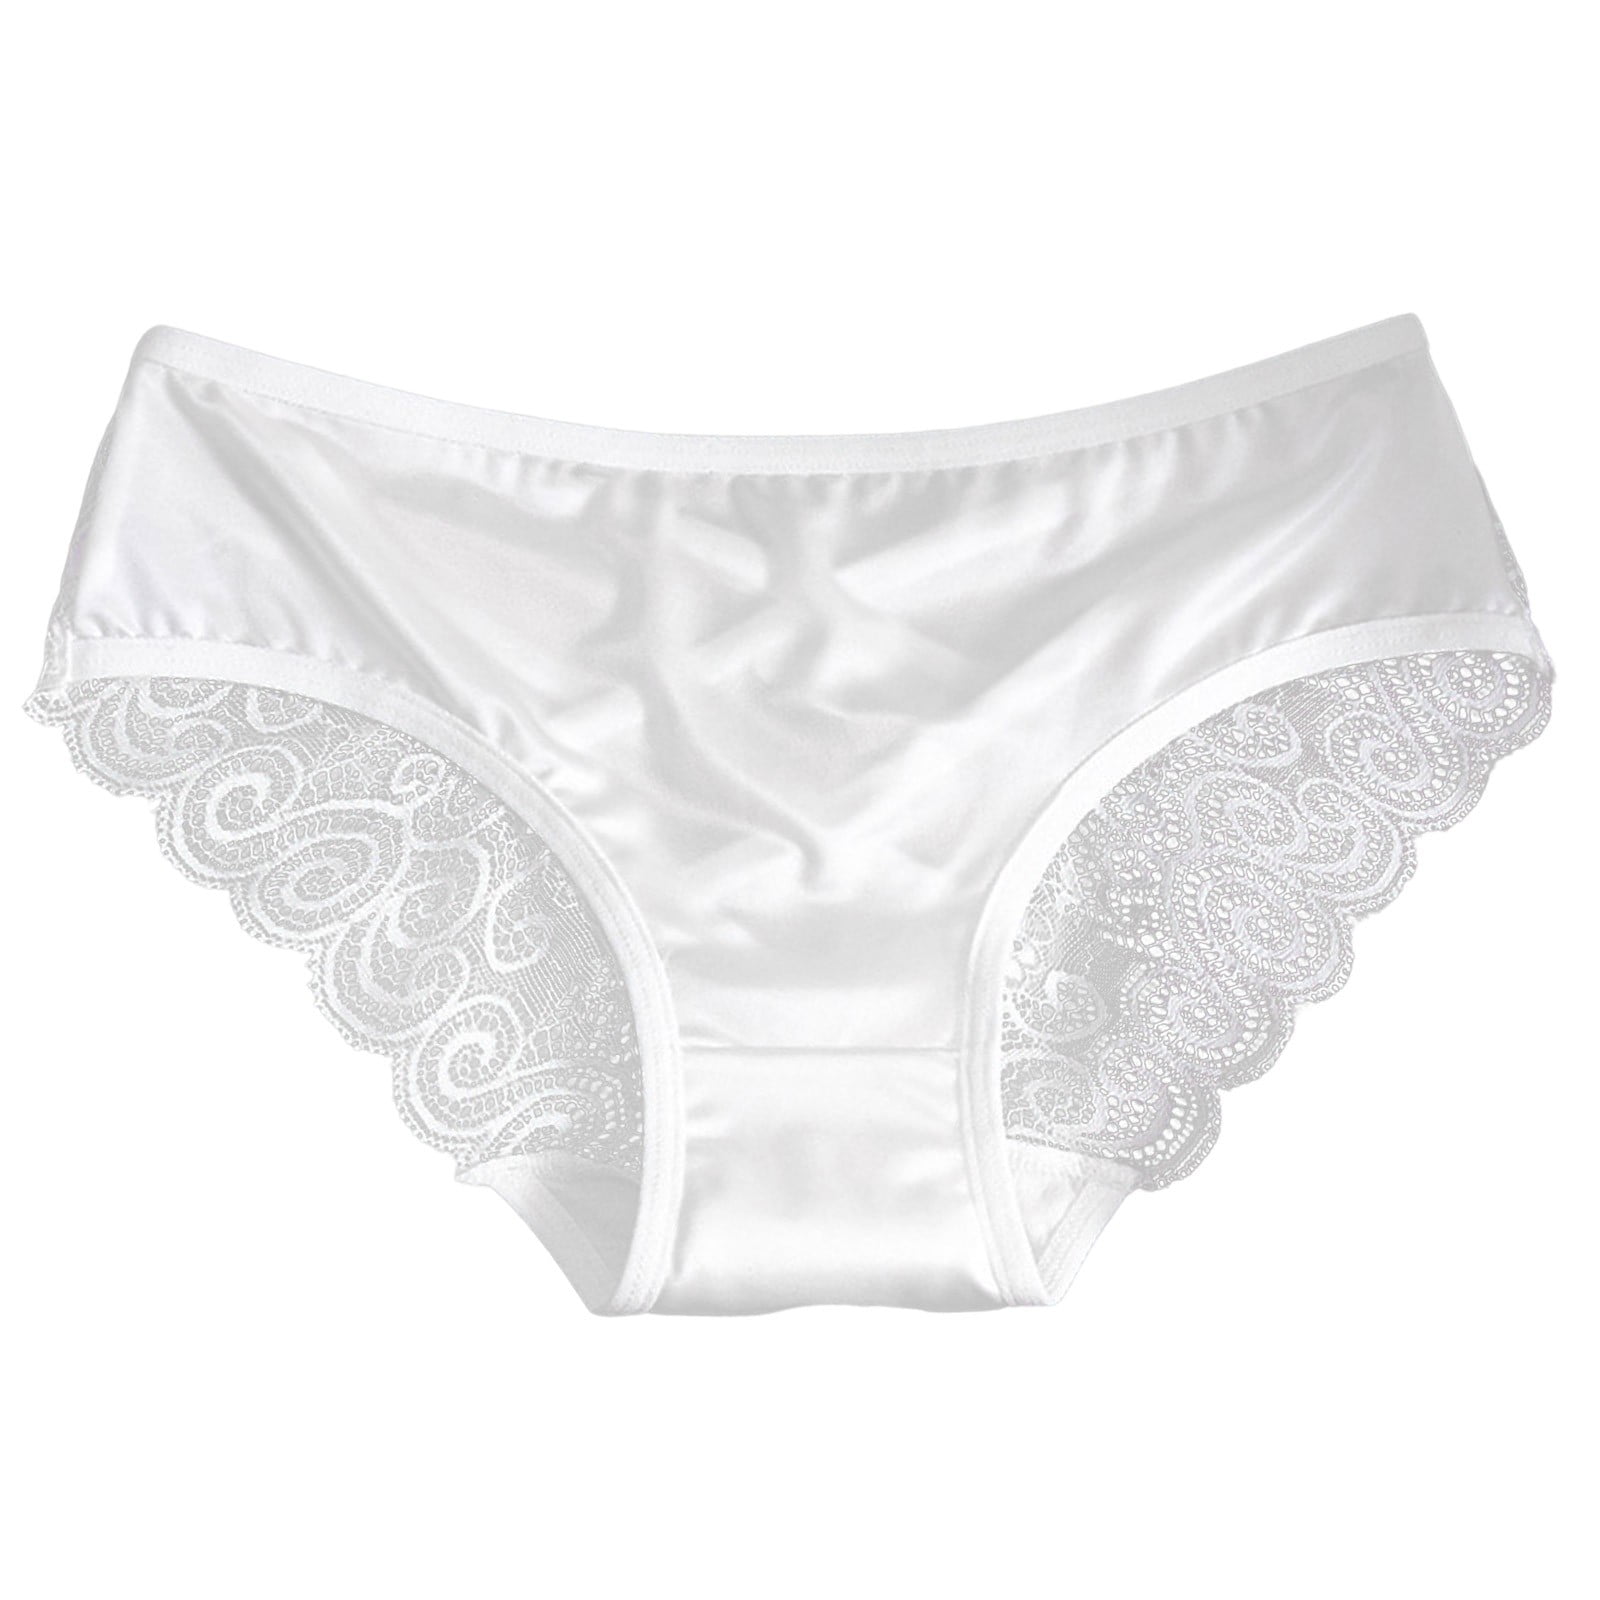 Fabiurt panties for women Women's Hollow Thin Strap Panties Comfortable ...